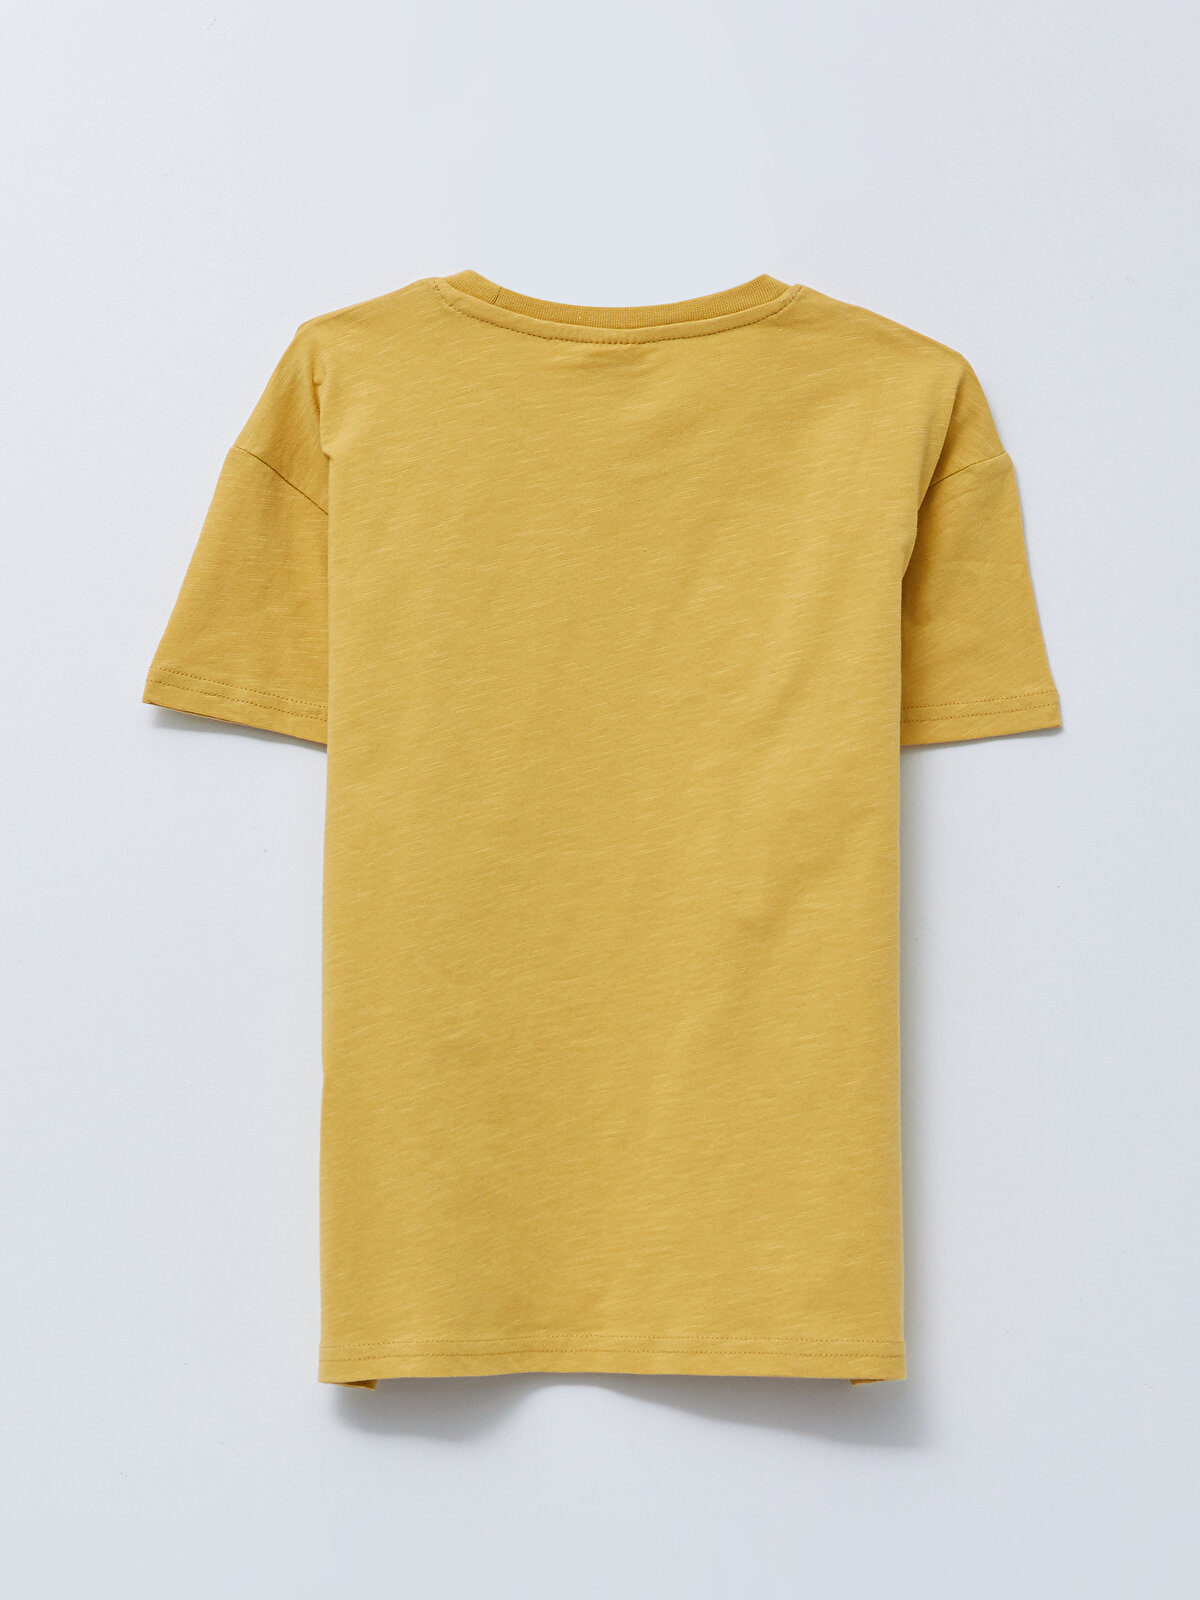 Crew Neck Printed Short Sleeve Cotton Boy T-Shirt -S24543Z4-G5Y 